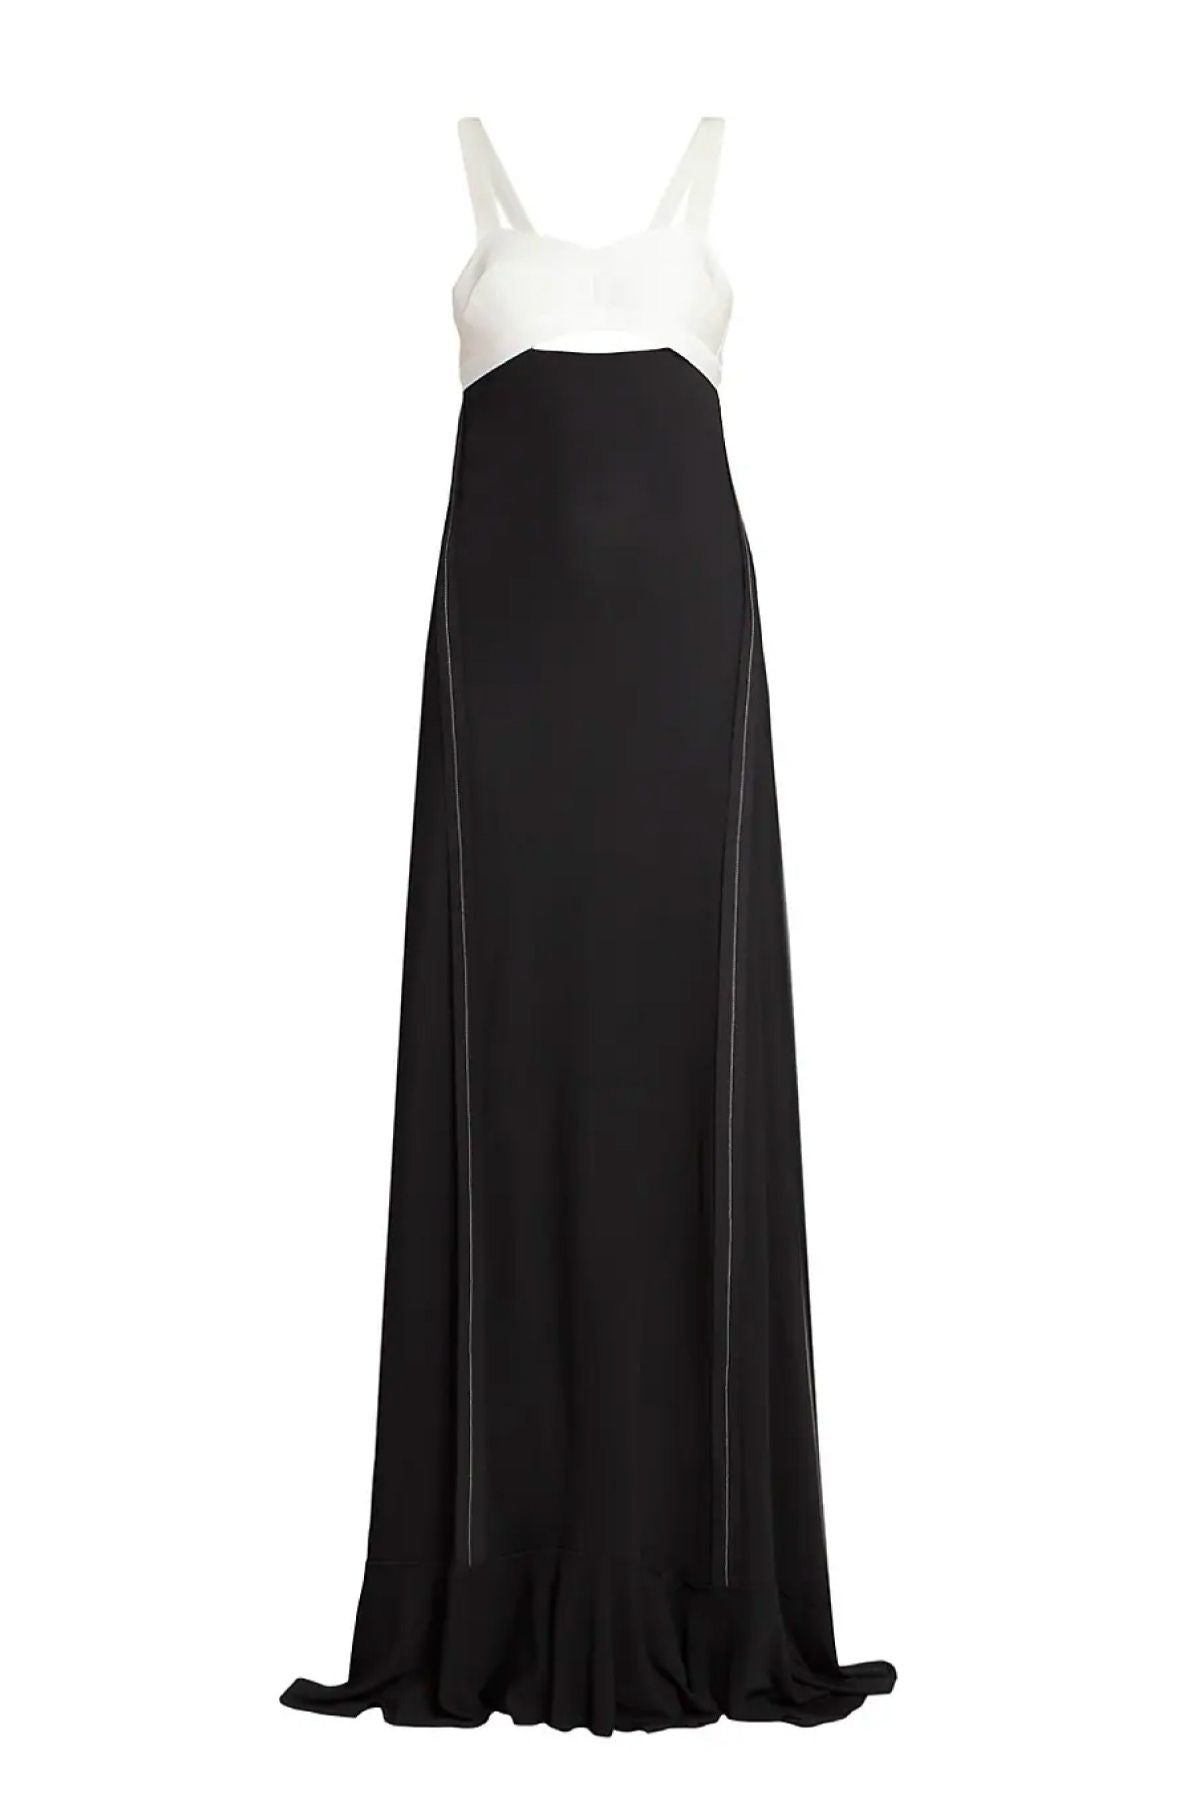 Victoria Beckham Bra Detail Maxi Dress - Black